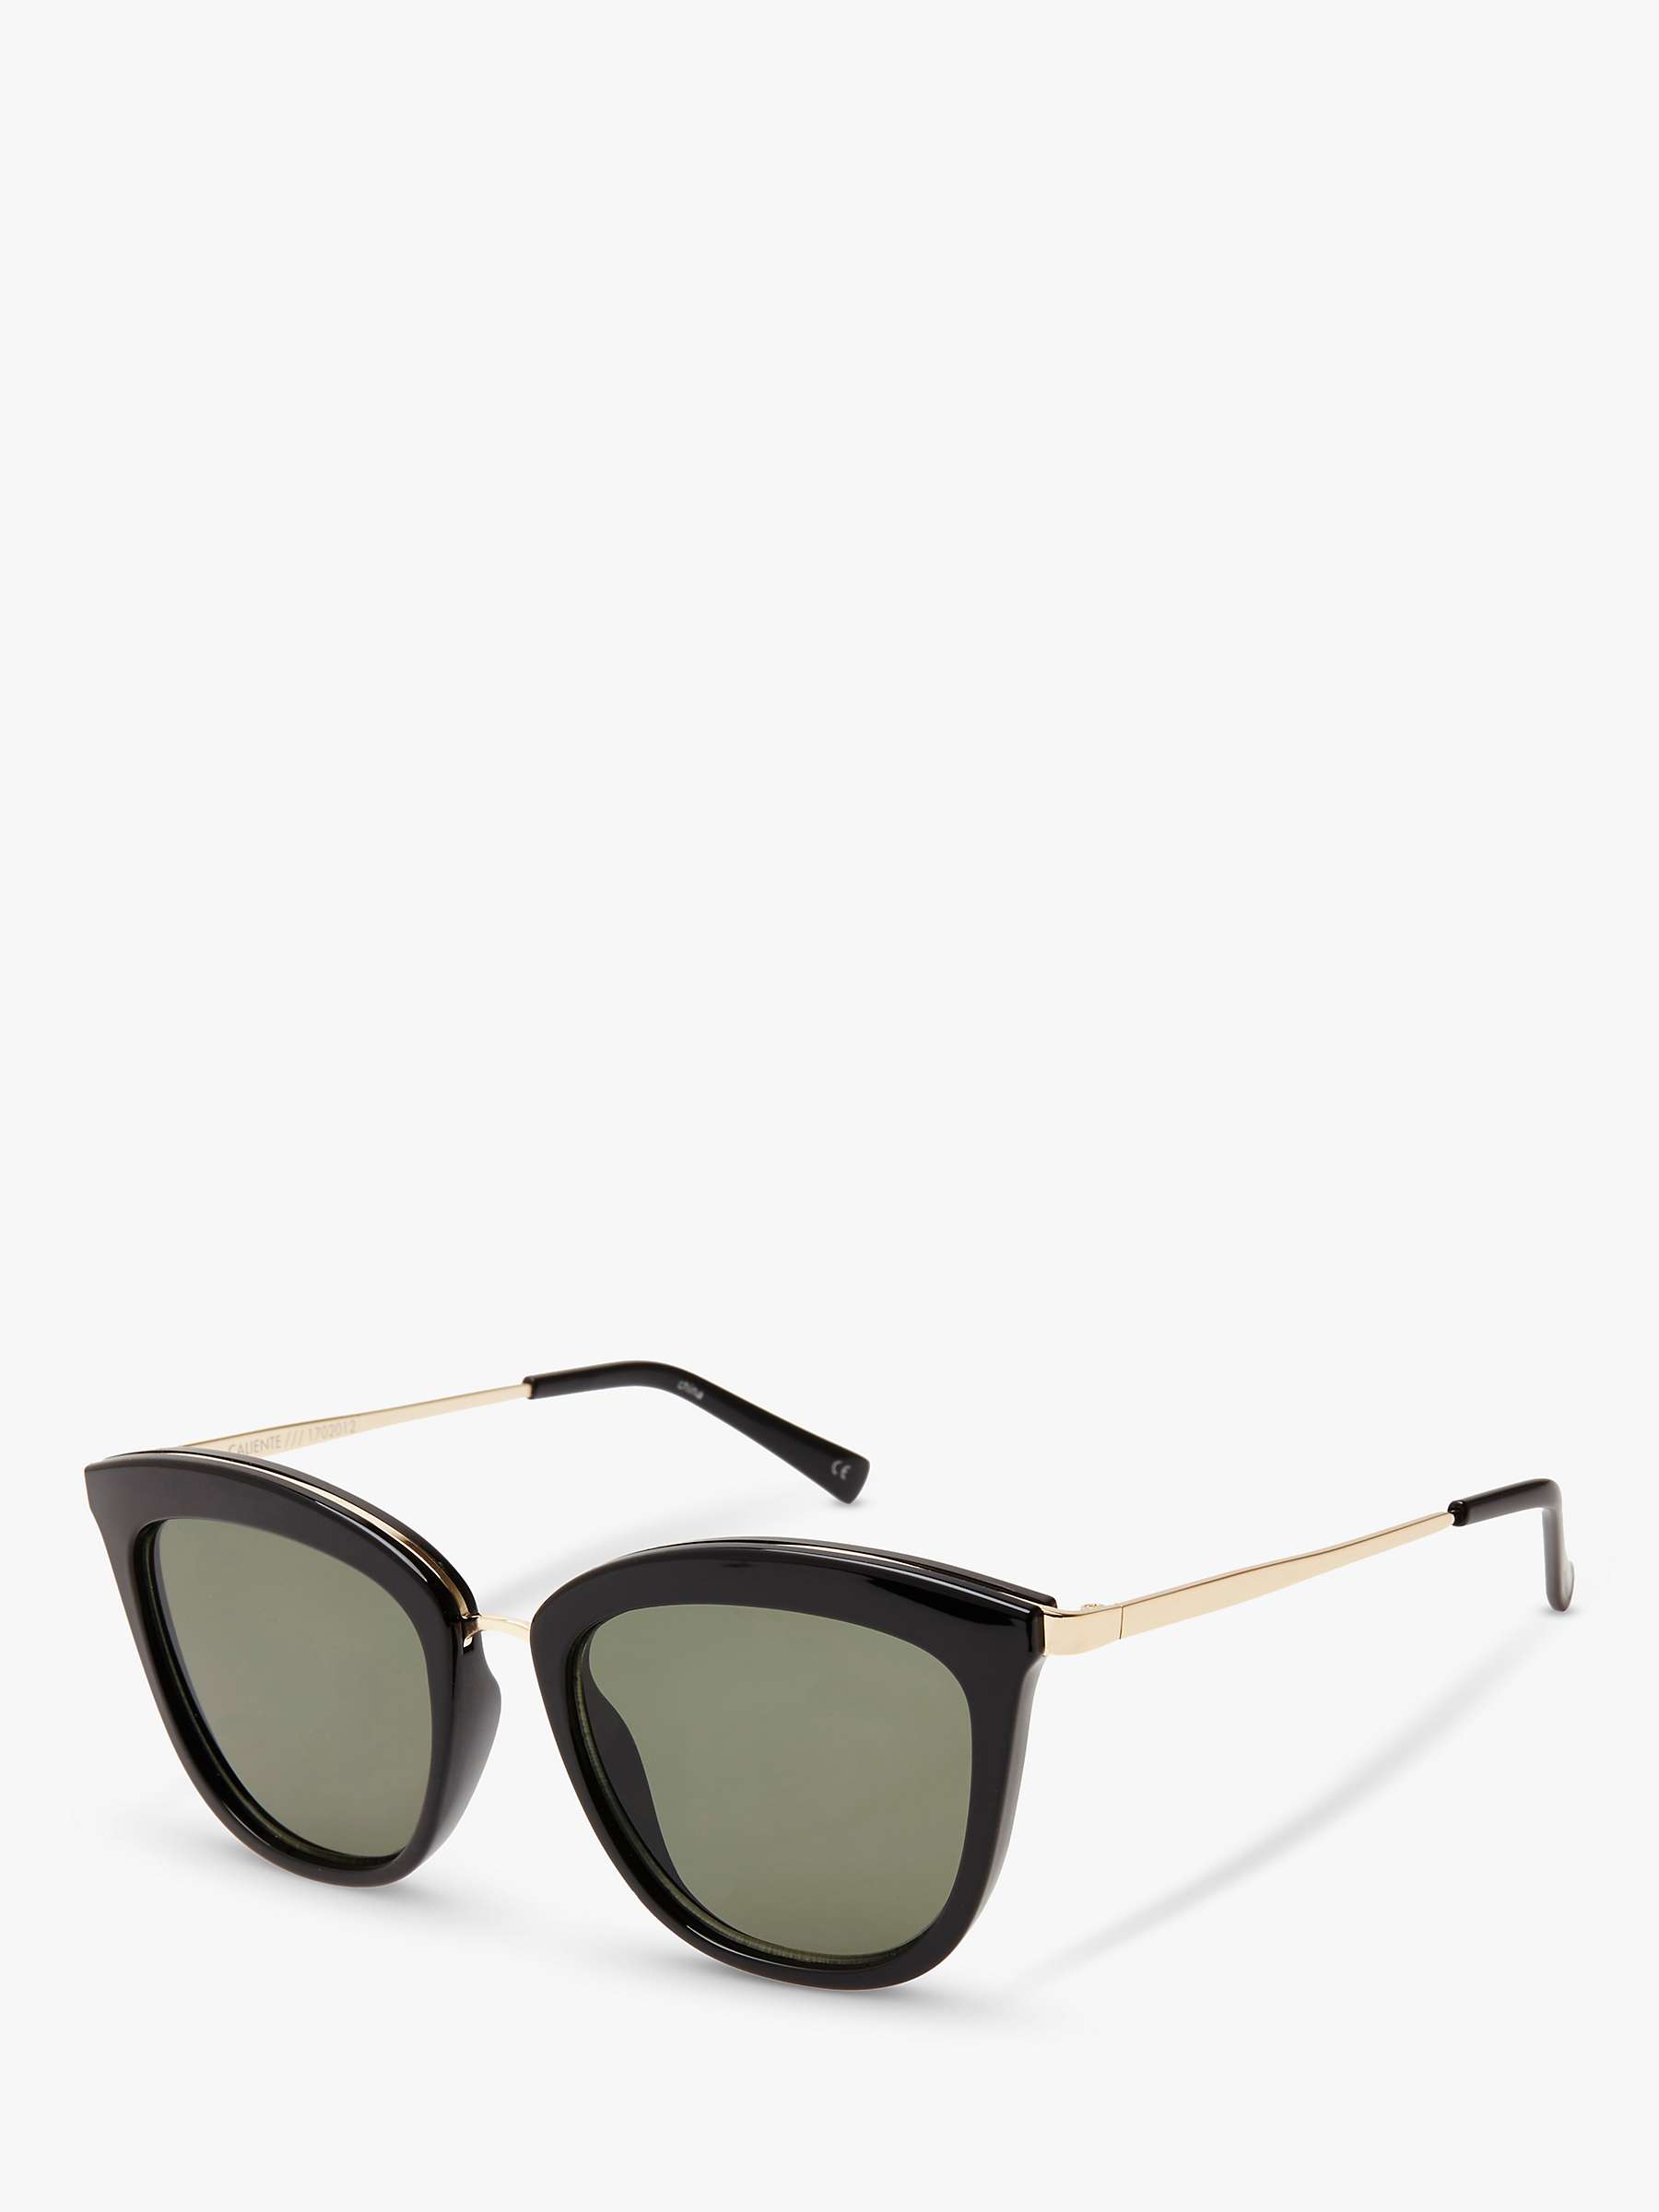 Buy Le Specs Women's Caliente Cat's Eye Sunglasses, Black Gold Online at johnlewis.com